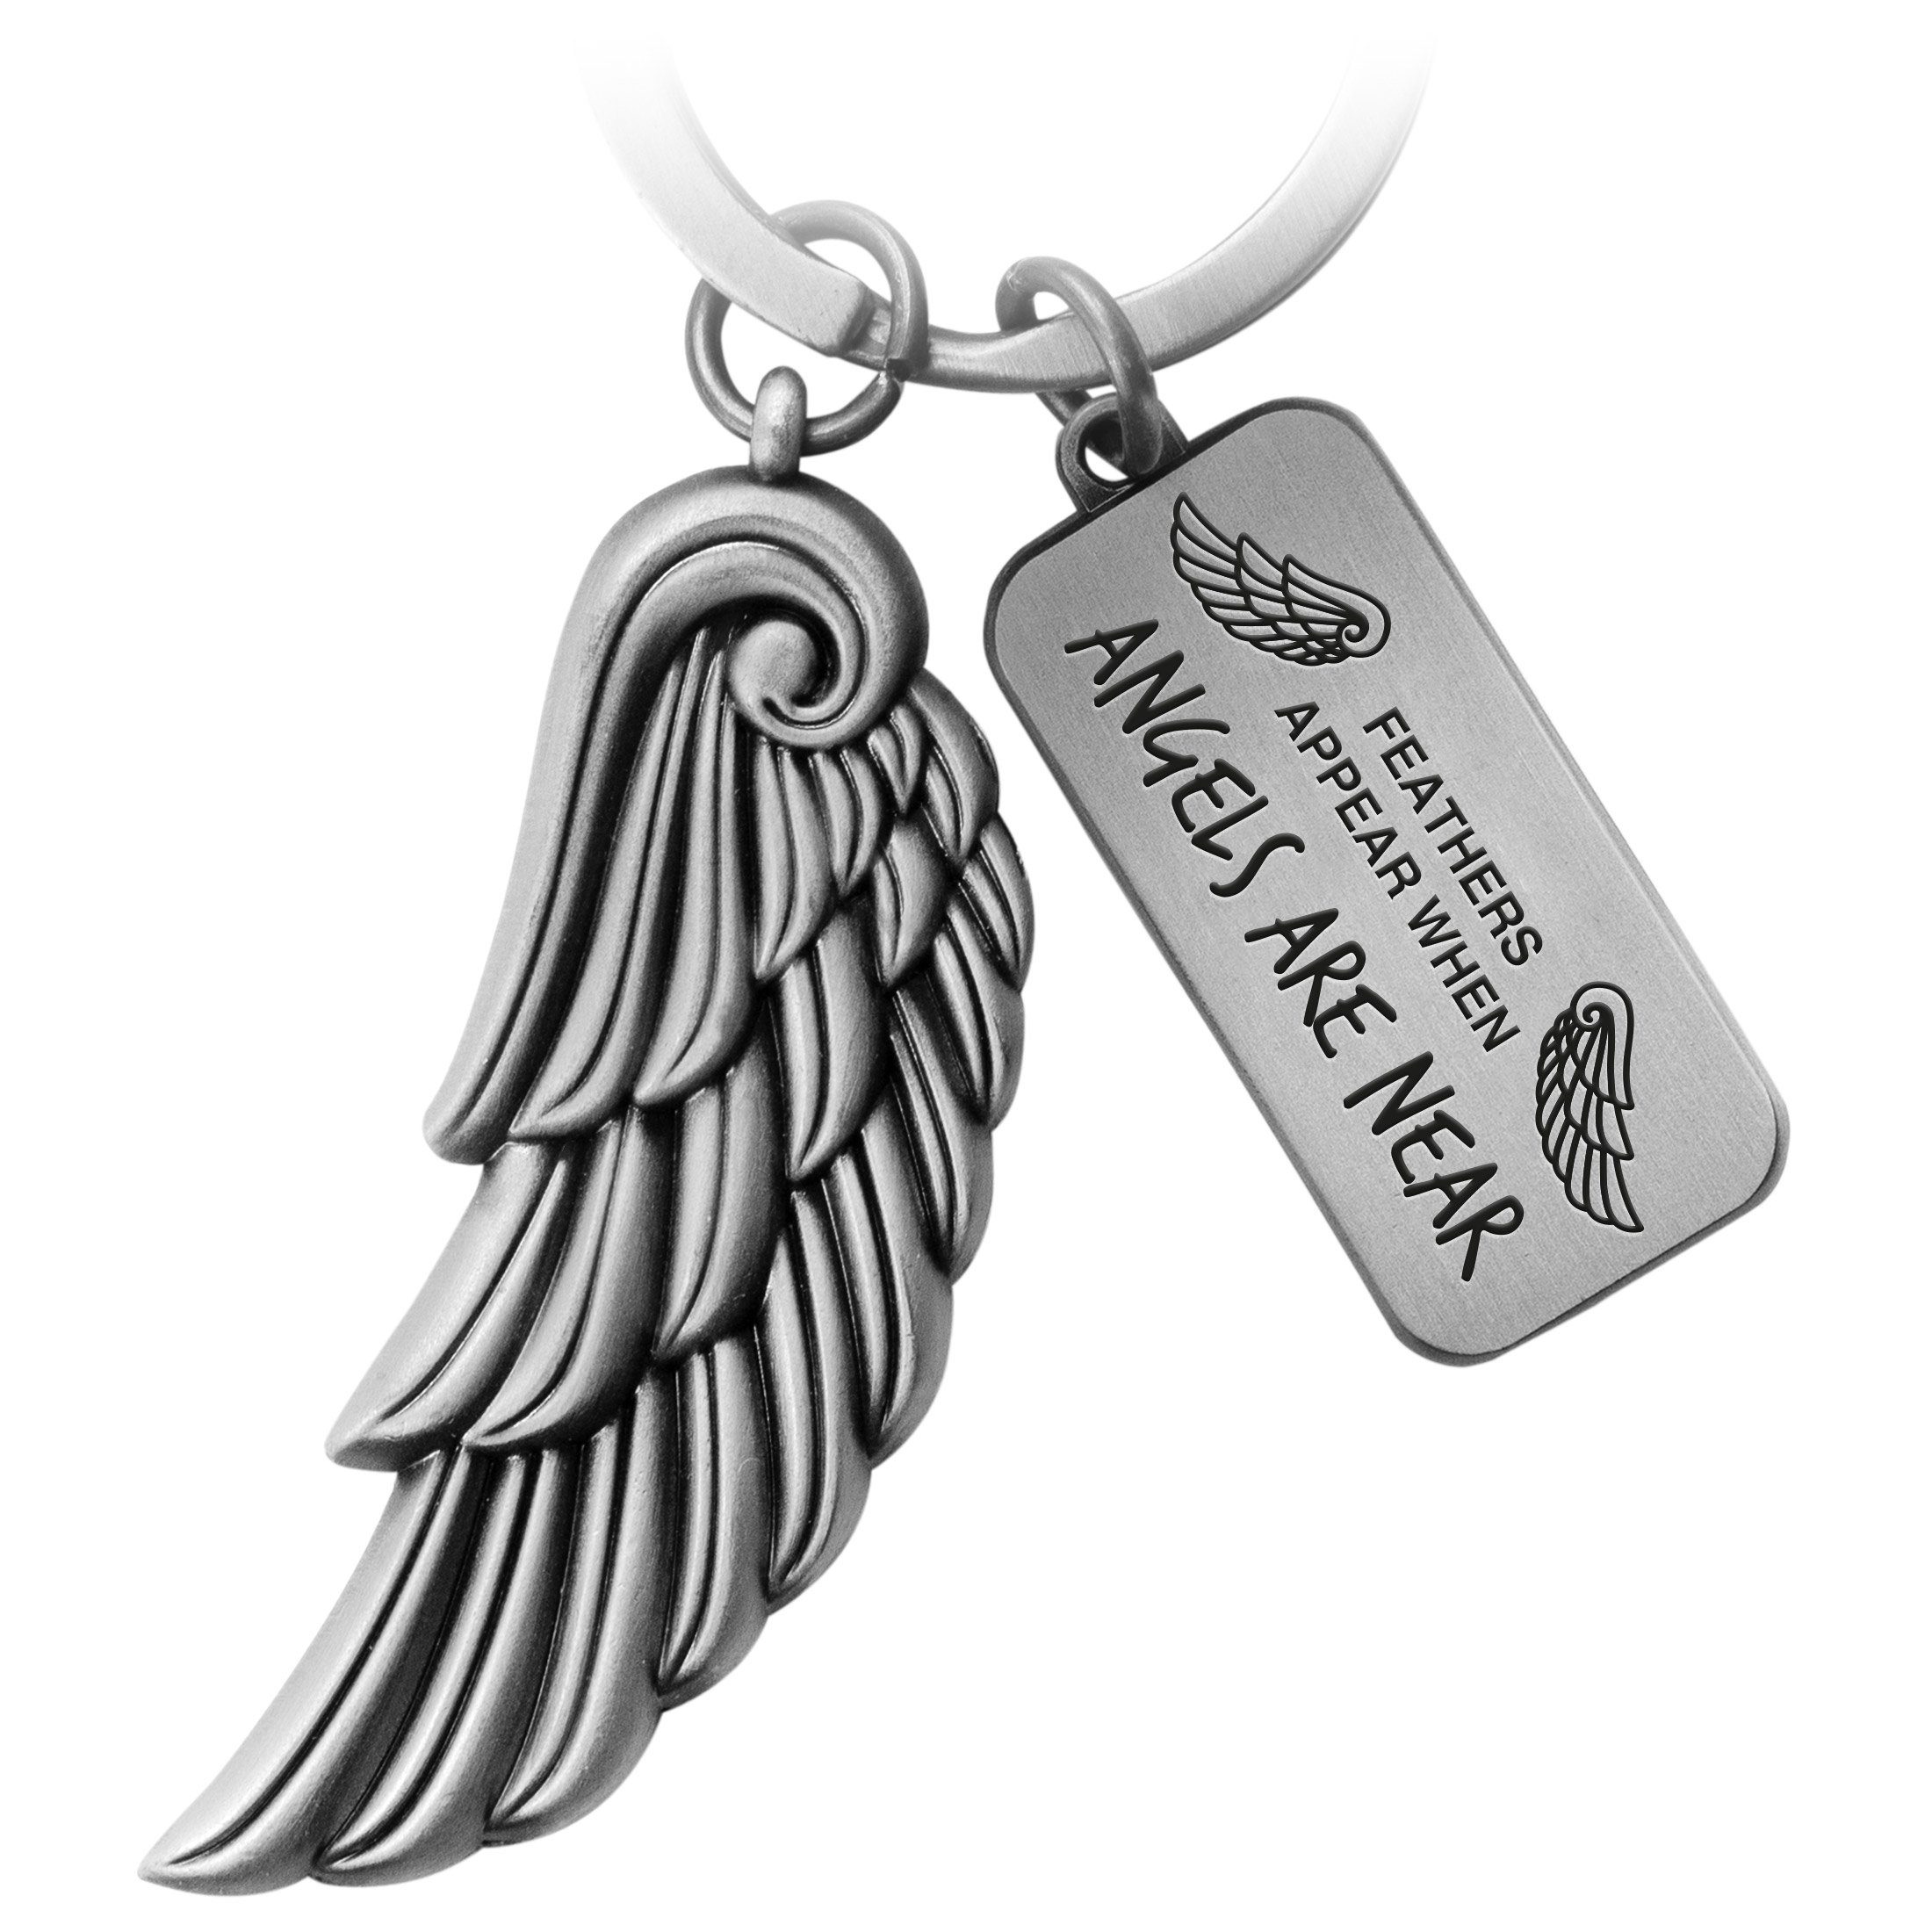 FABACH Schlüsselanhänger Engelsflügel Angel mit Gravur - Angels Are Near - Schutzengel Geschenk Antique Silber